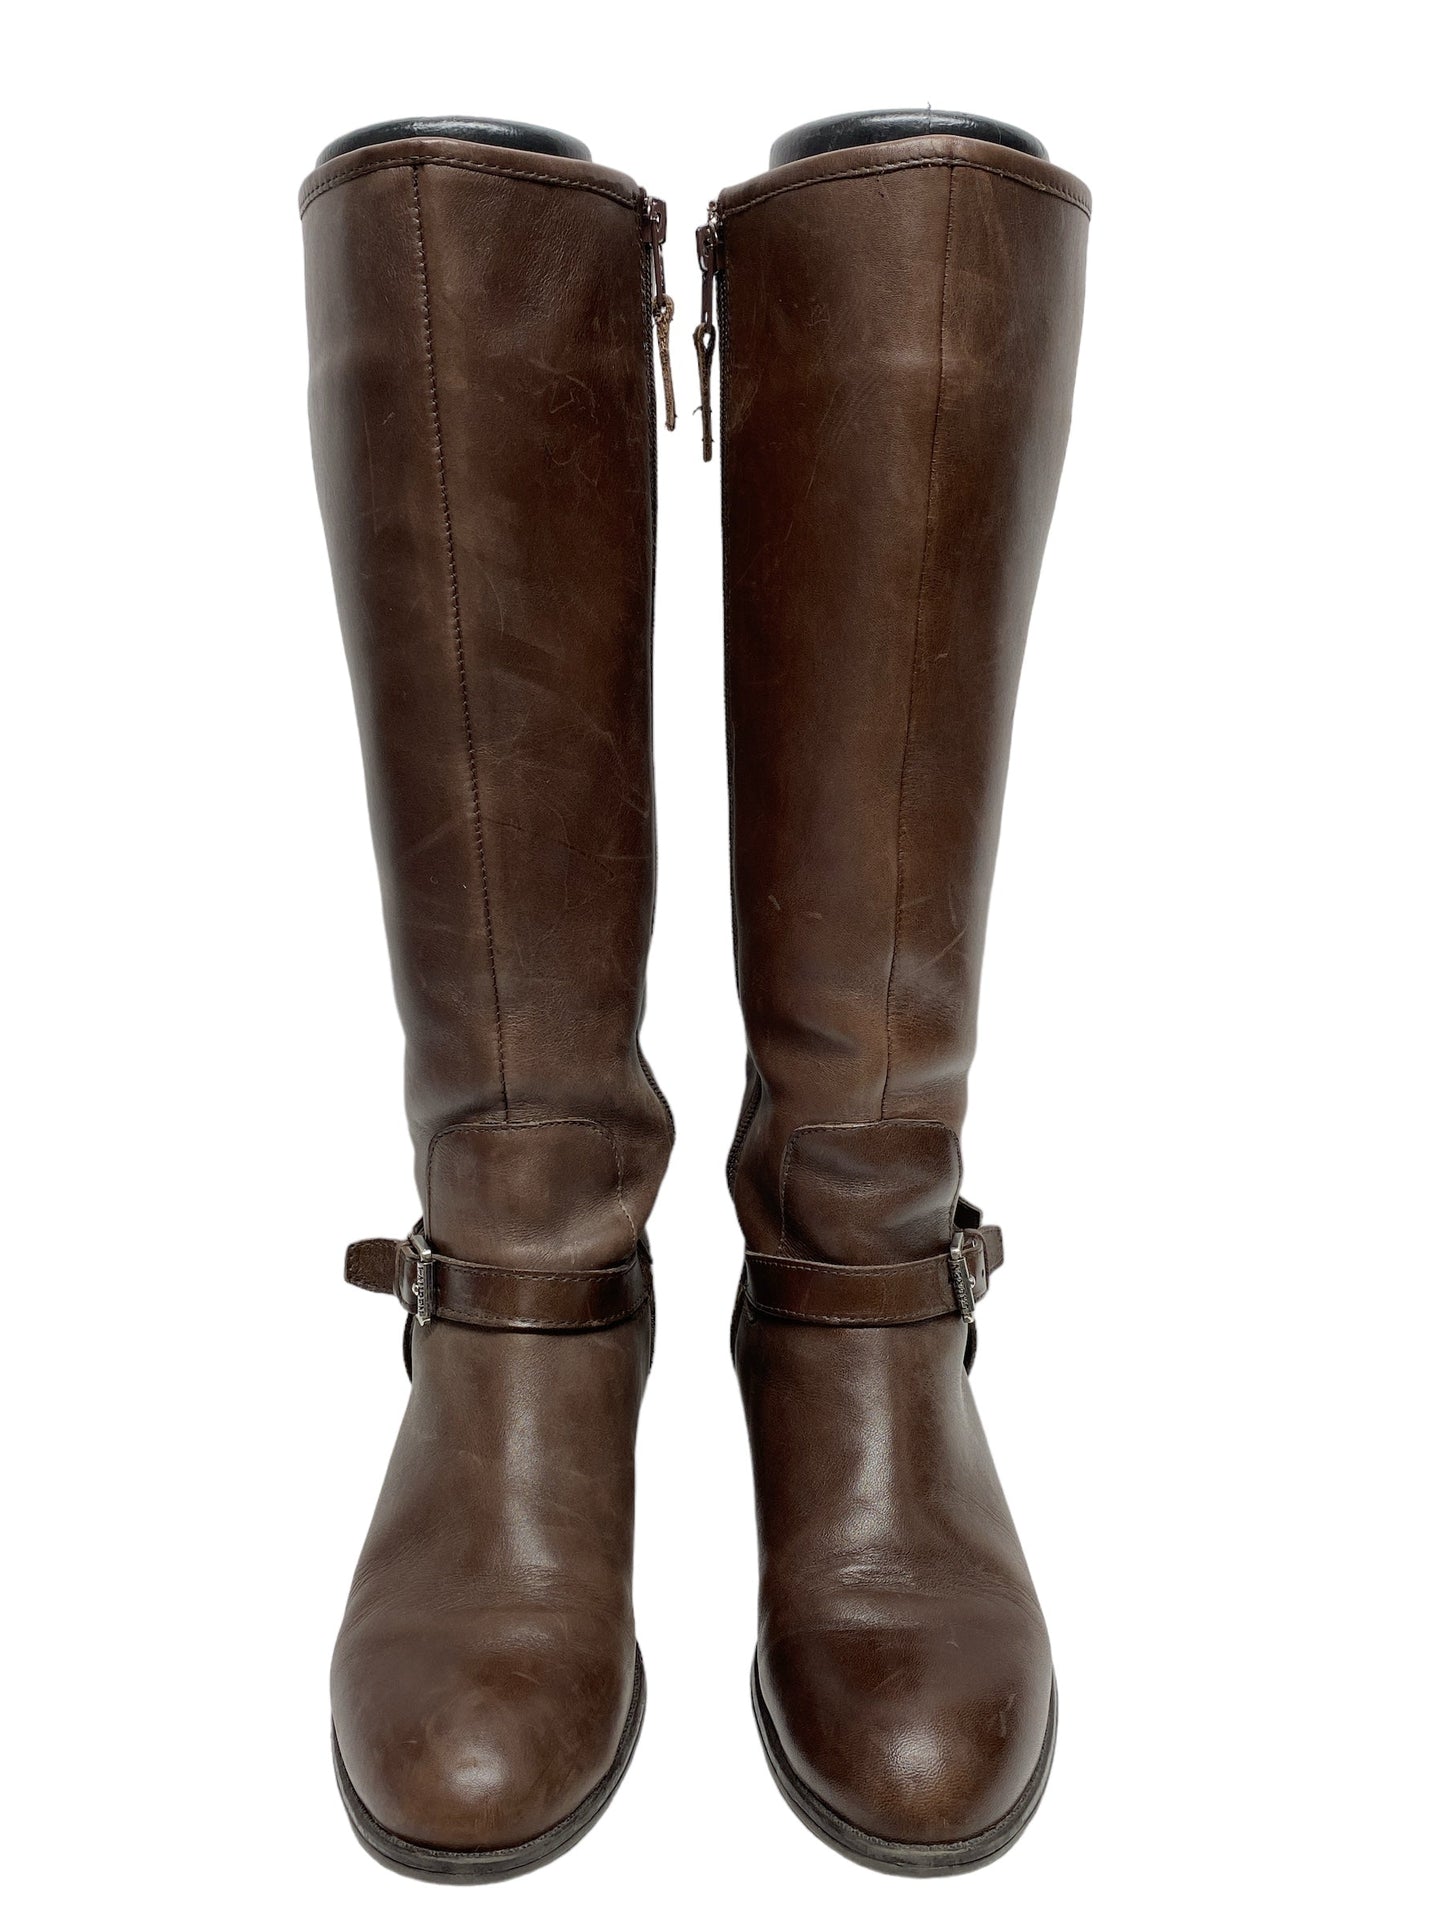 Boots Leather By Lauren By Ralph Lauren  Size: 6